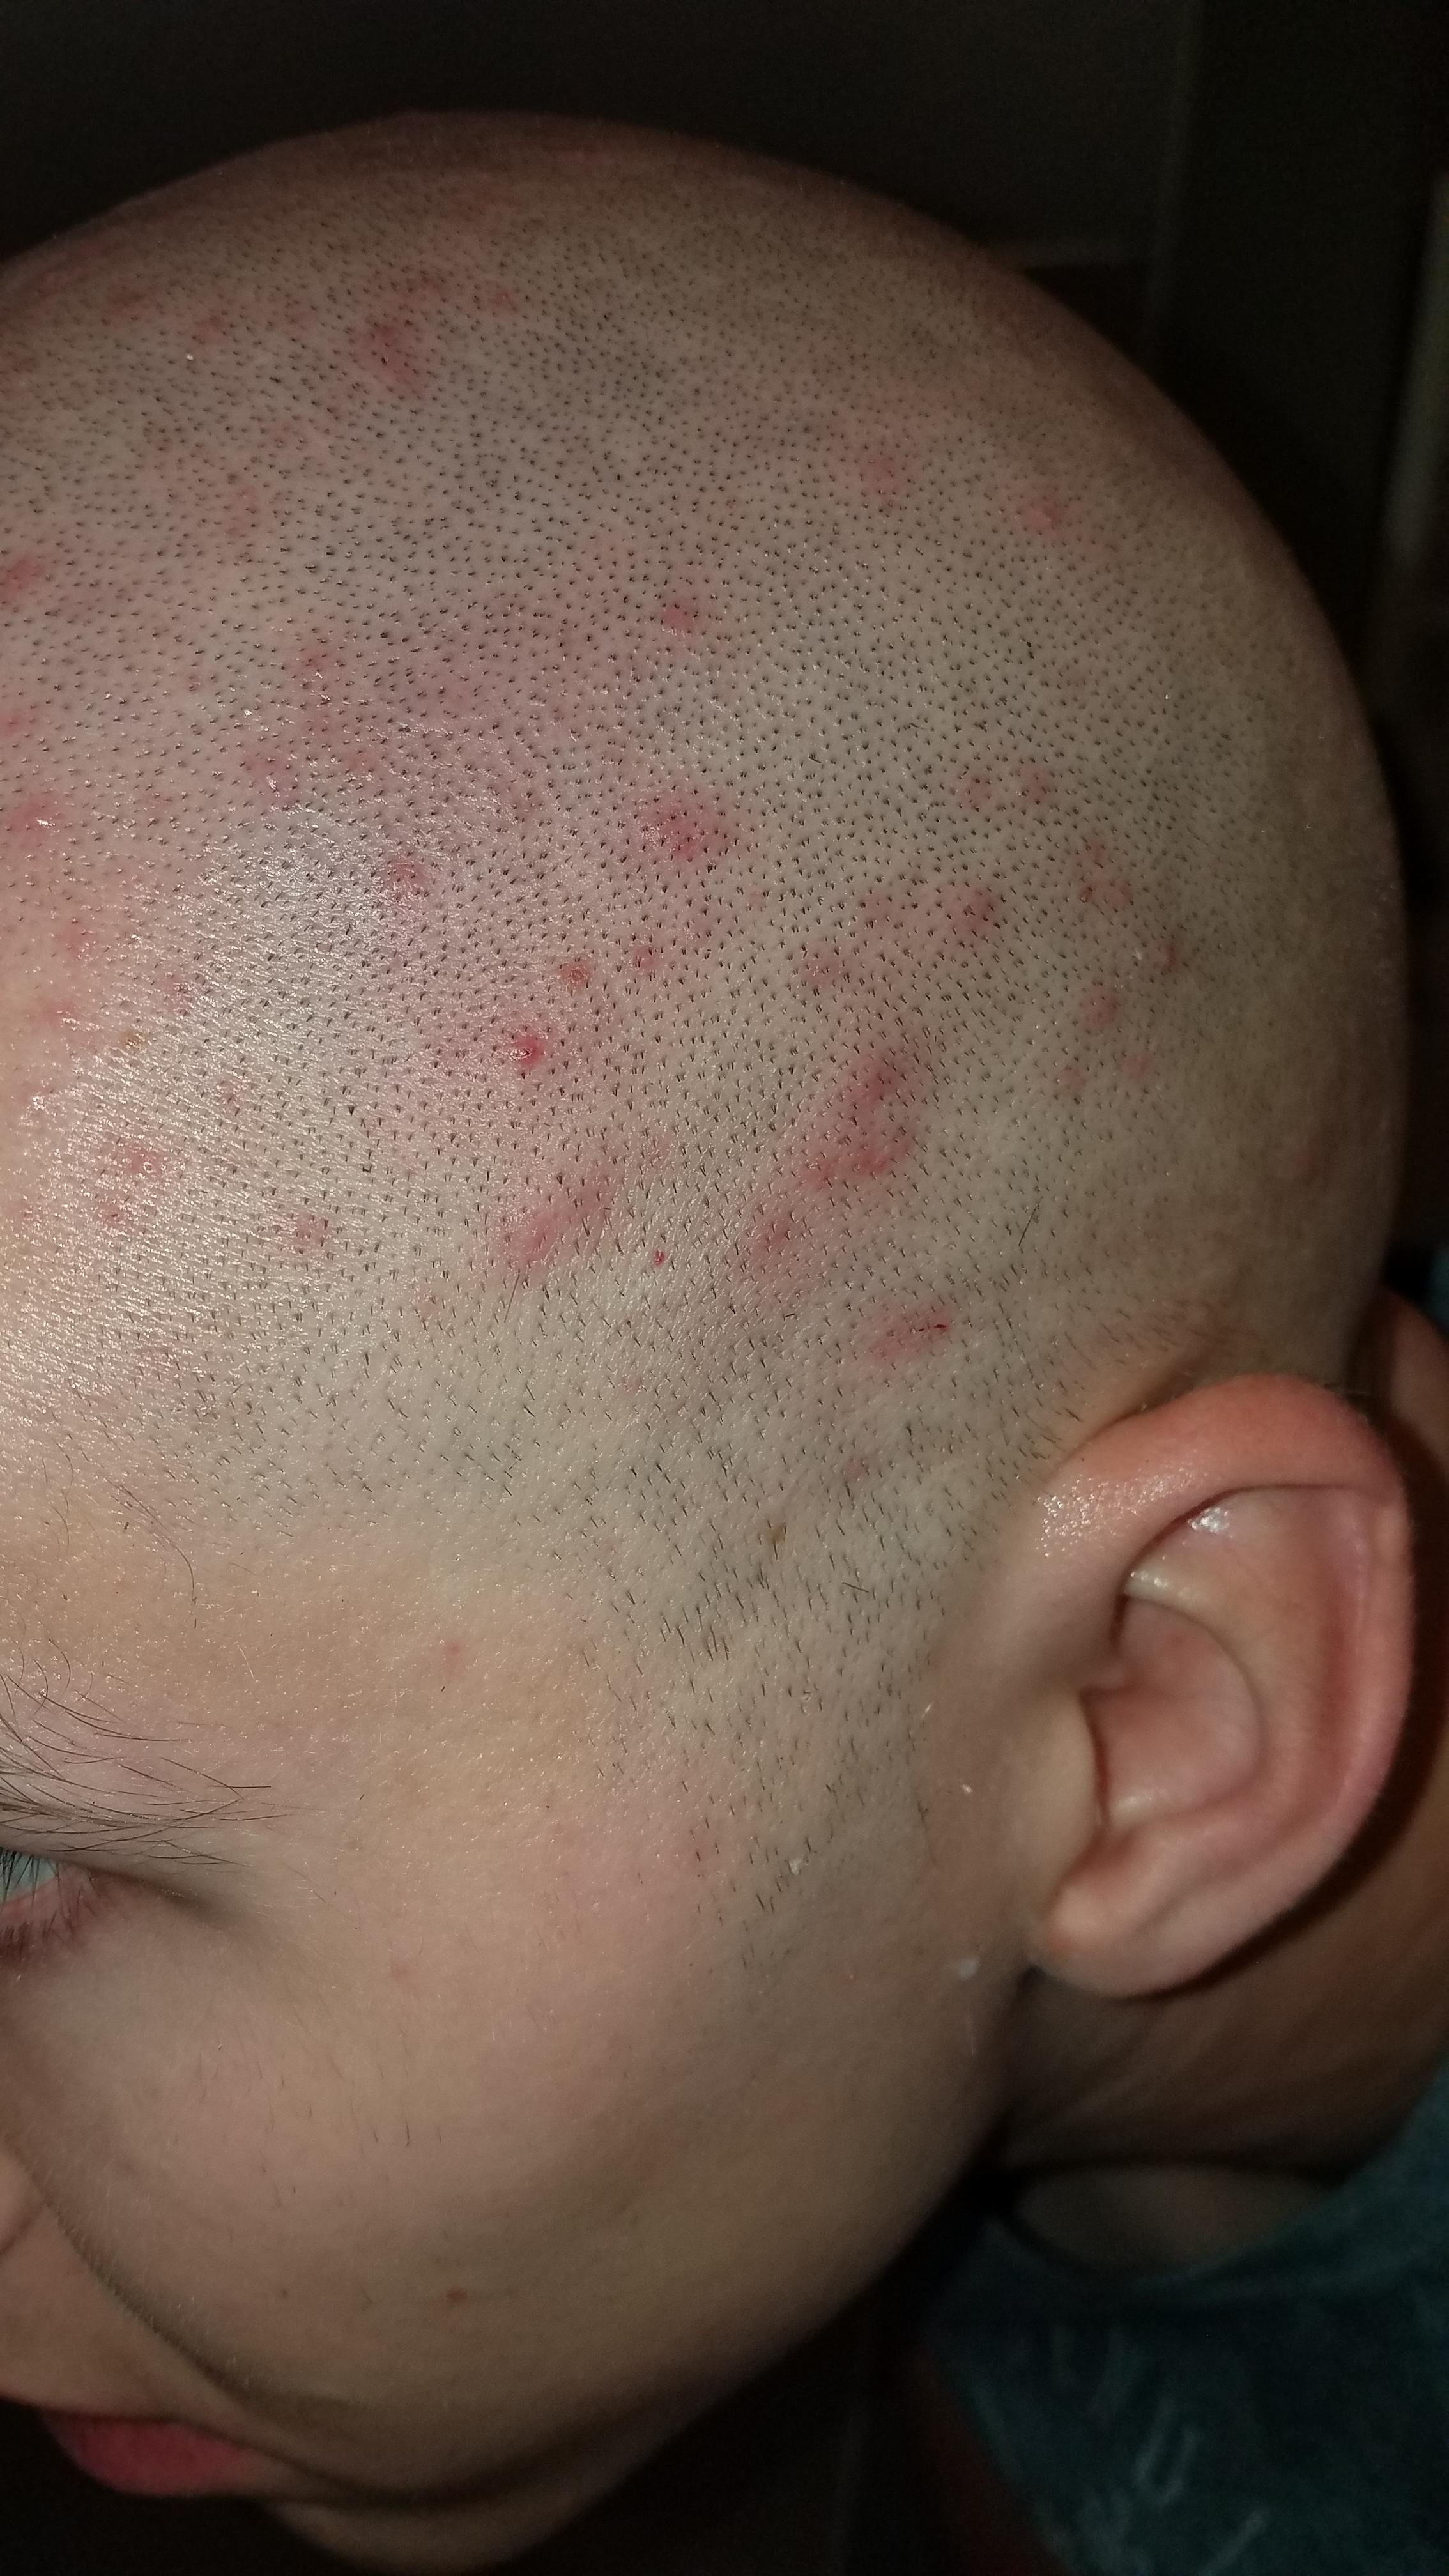 Scalp Acne/Folliculitis (Pictures) General acne